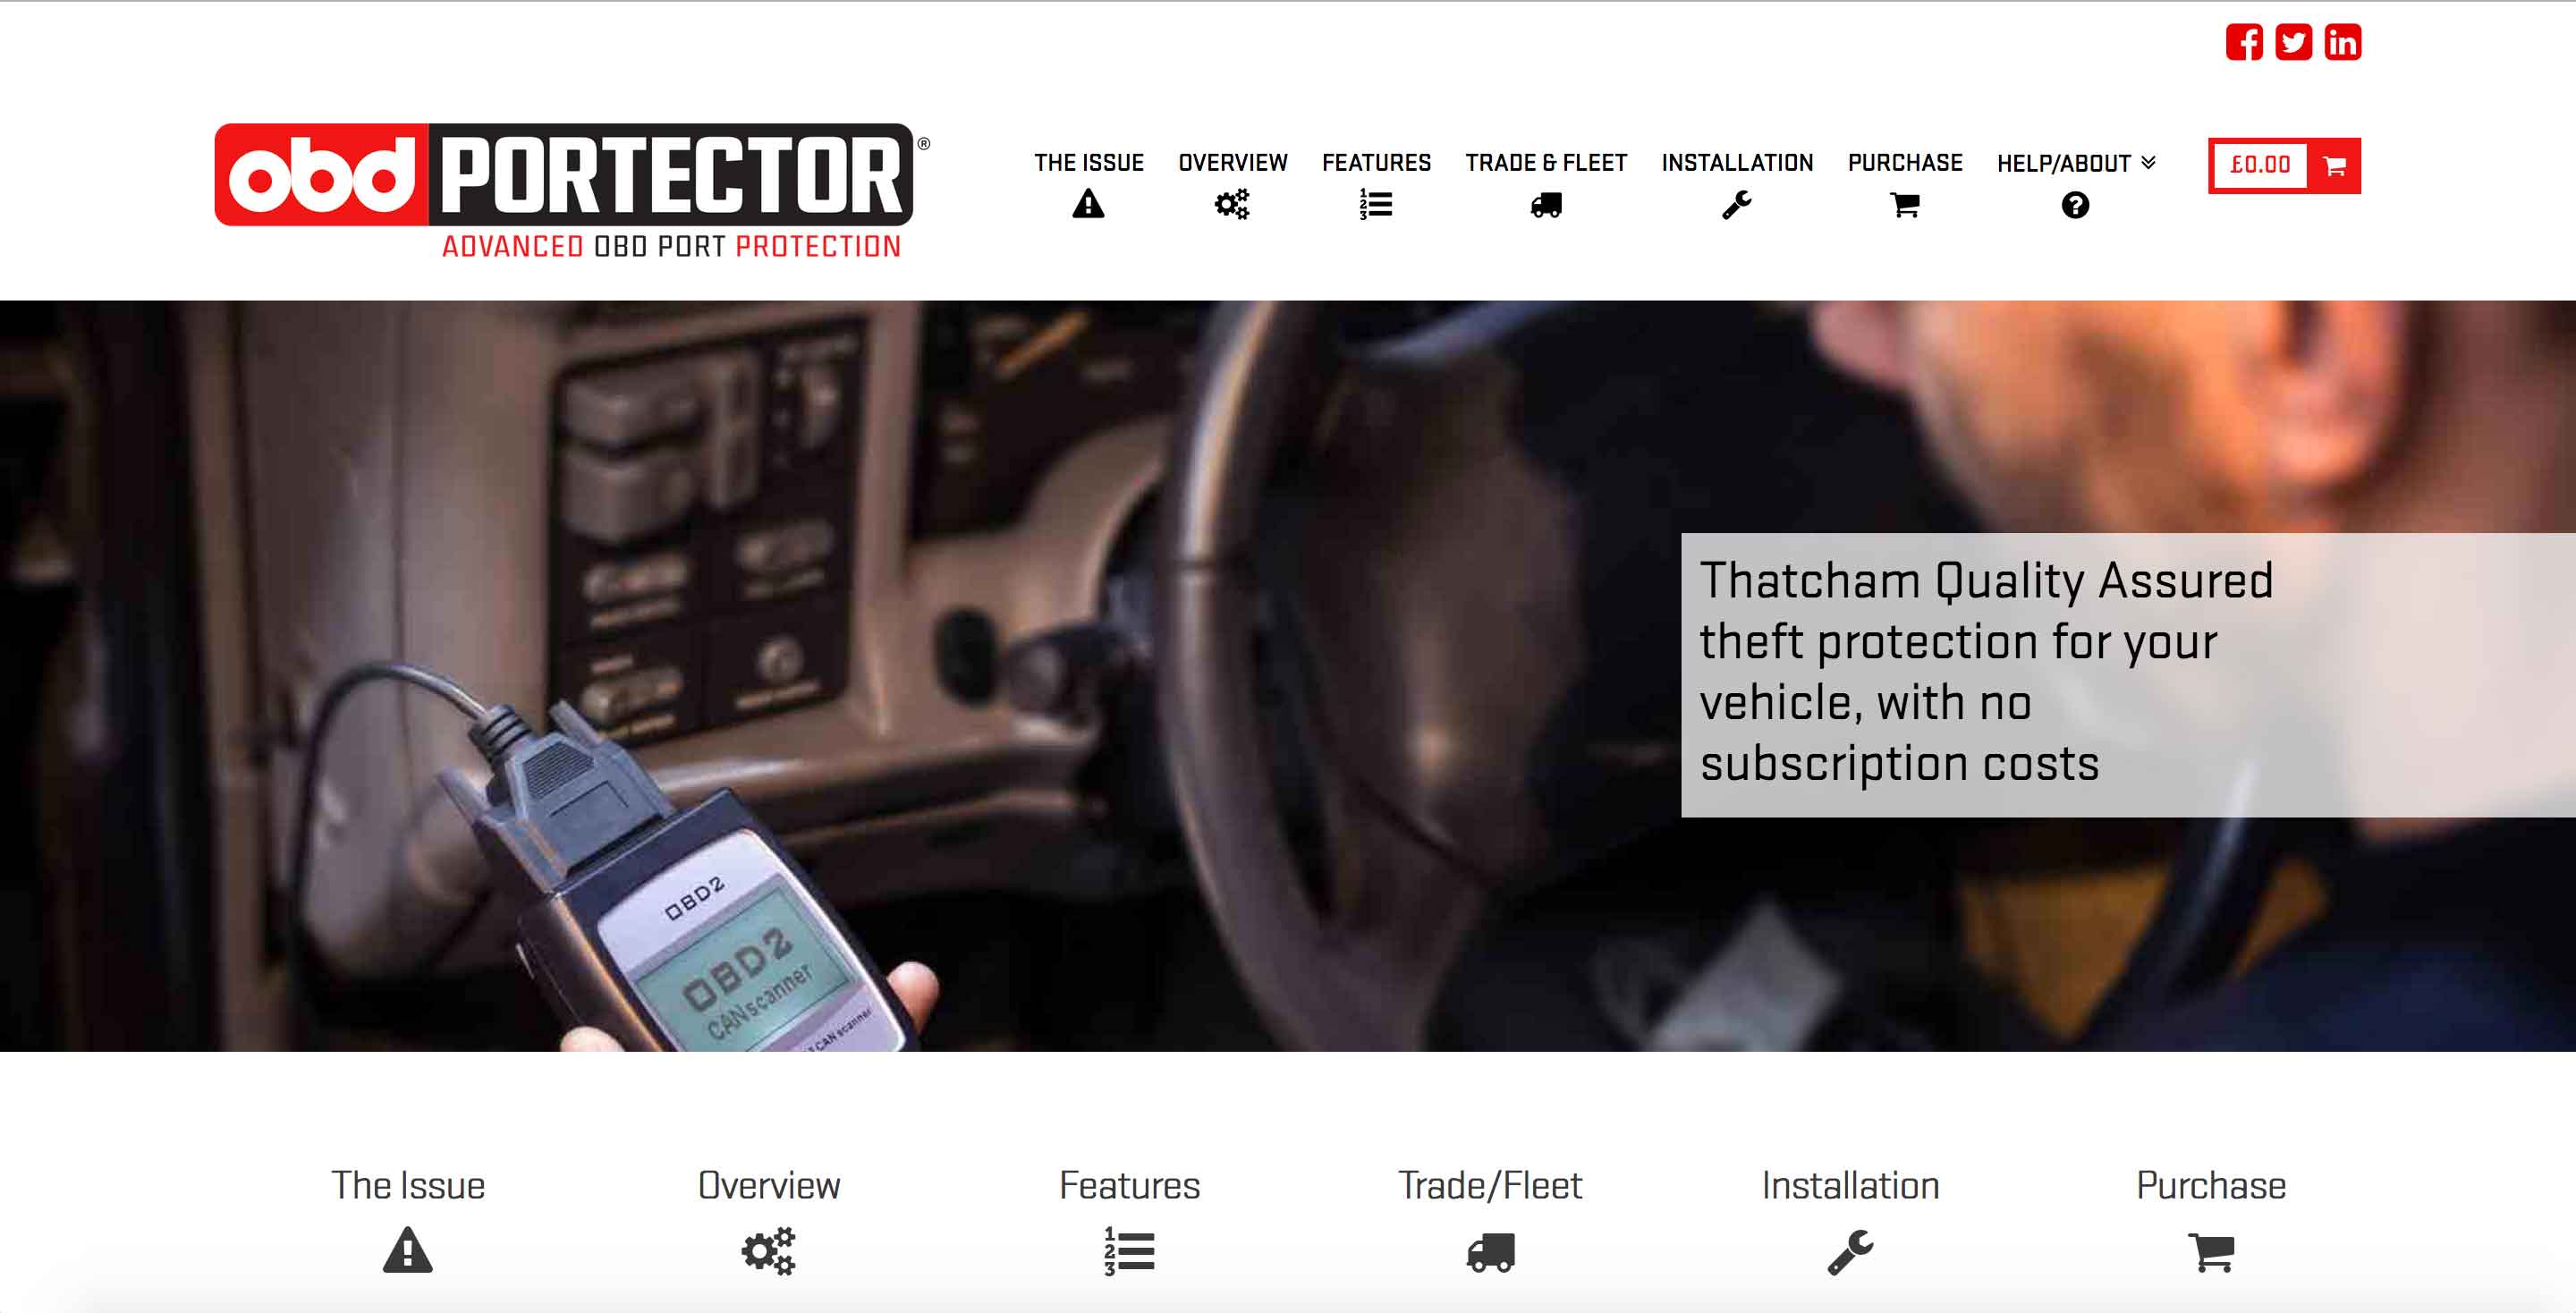 obdportector obd port security protection website screenshot